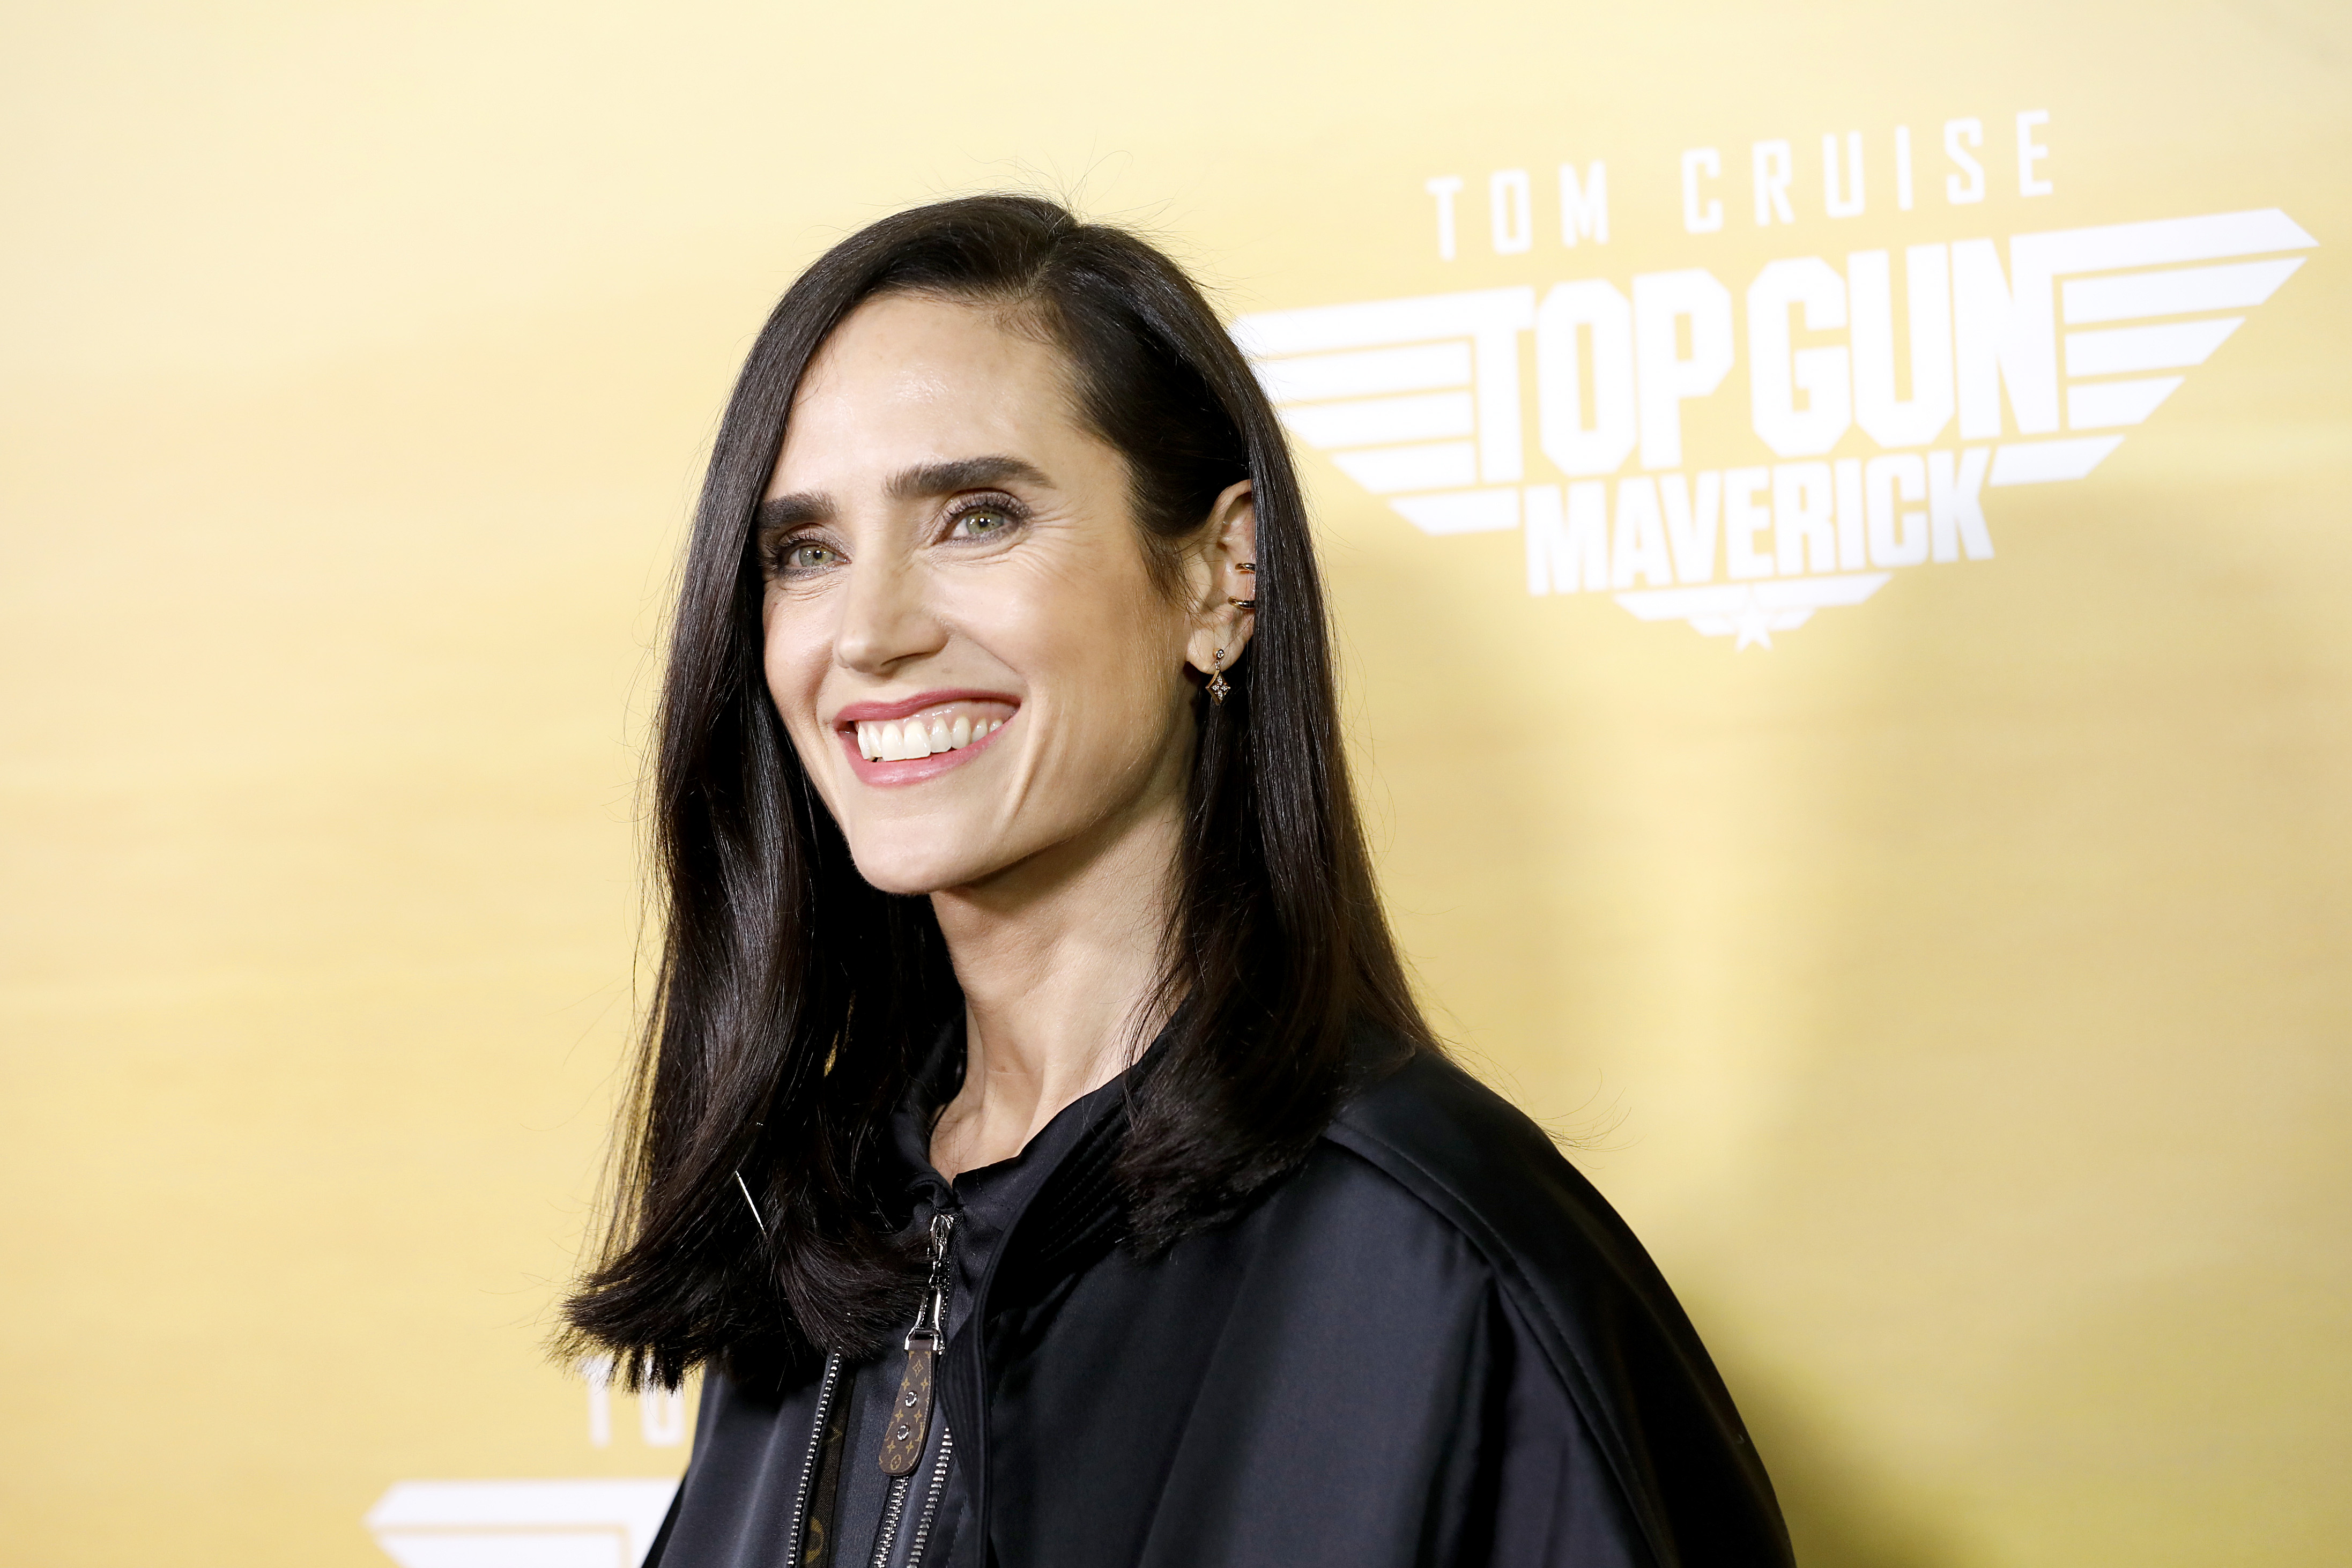 Jennifer Connelly Wore Louis Vuitton To The 'Top Gun: Maverick' New York  Screening